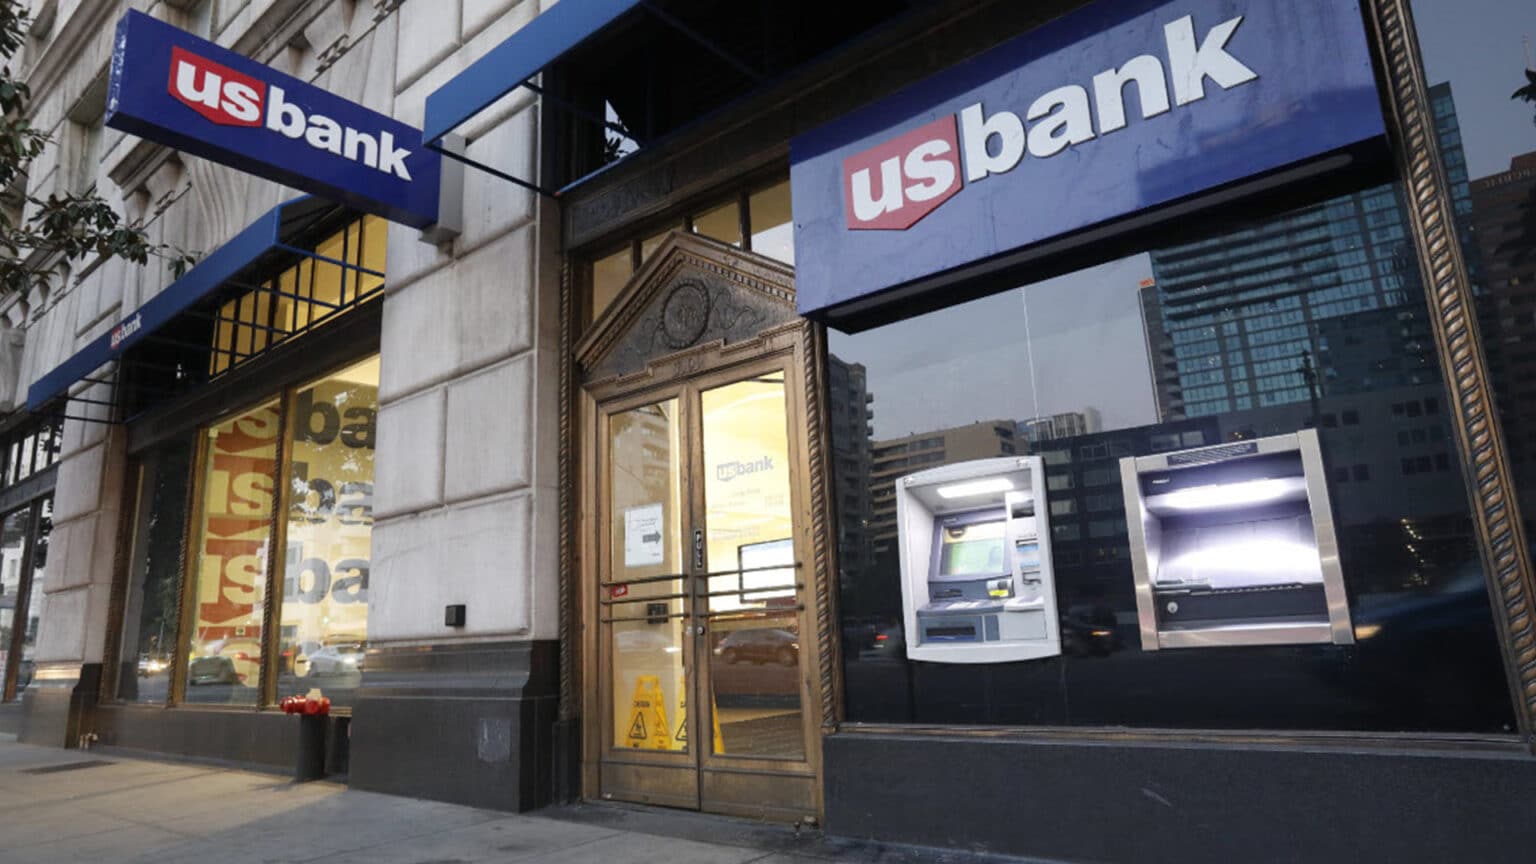 U.S. Bank Bonus 500 For New Business Checking Accounts